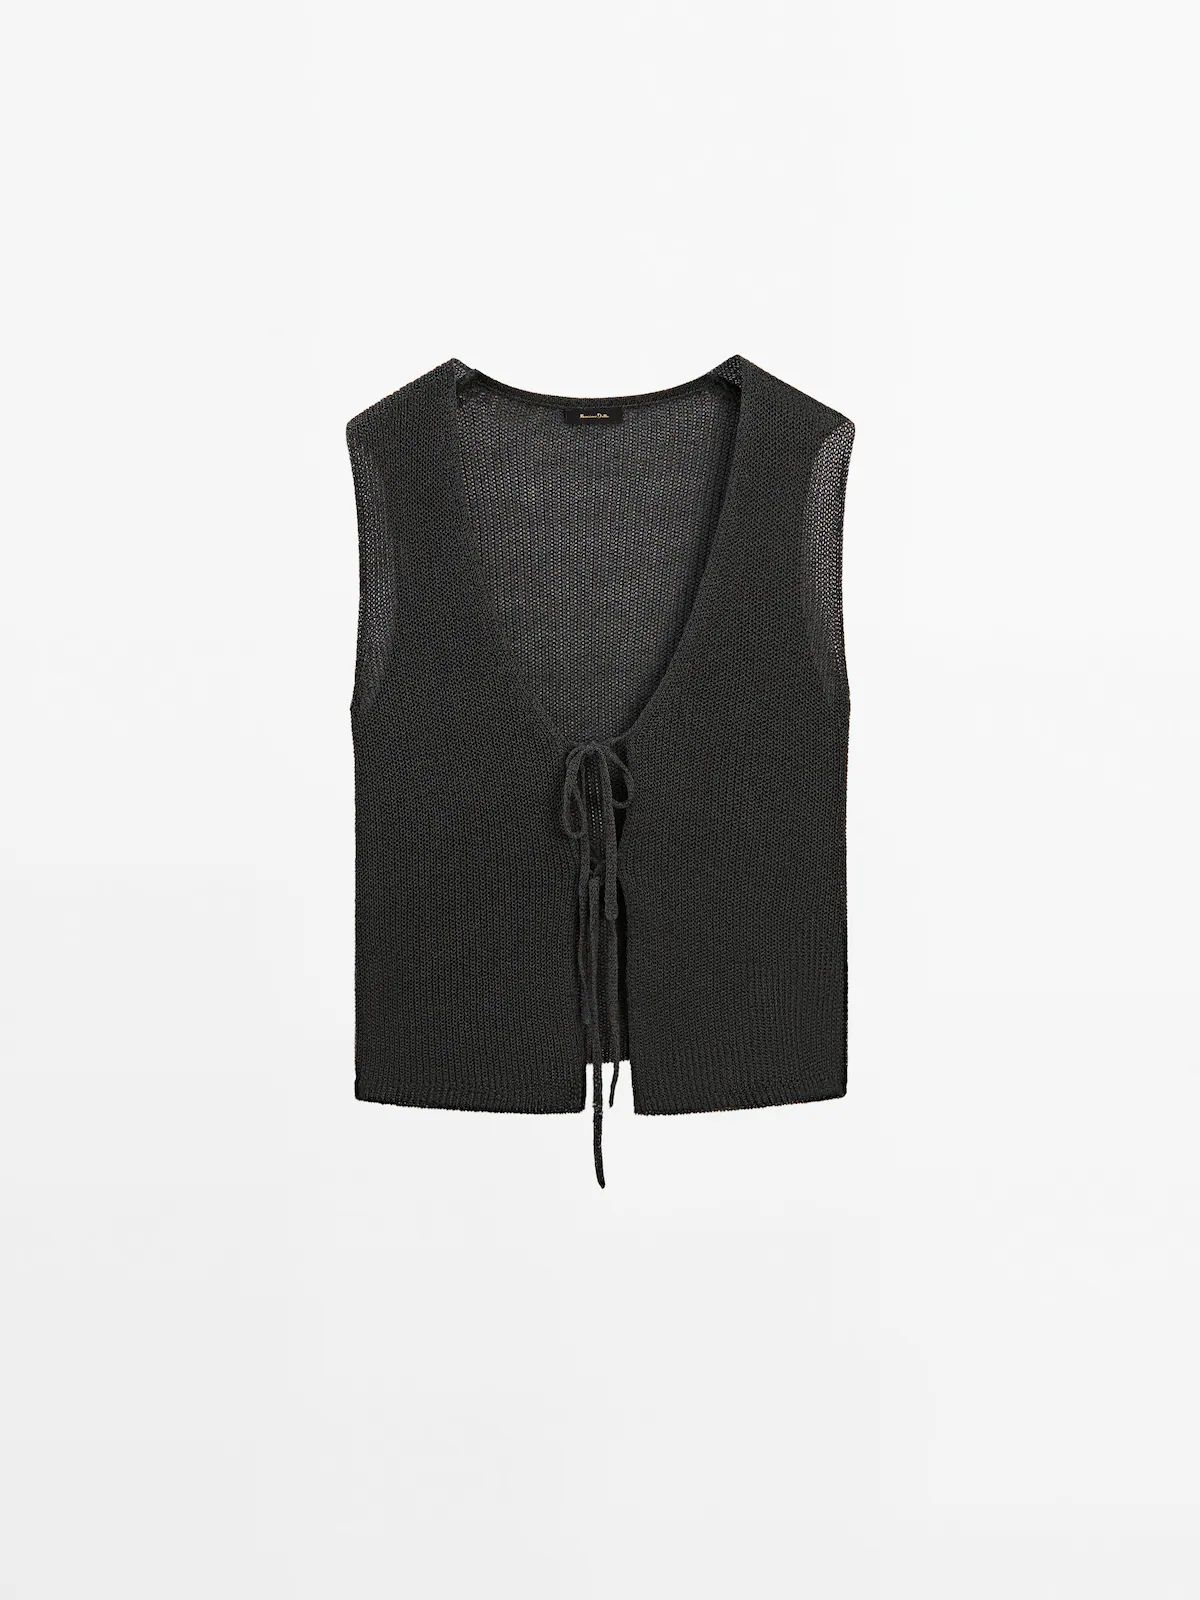 Knit vest with tie details | Massimo Dutti (US)